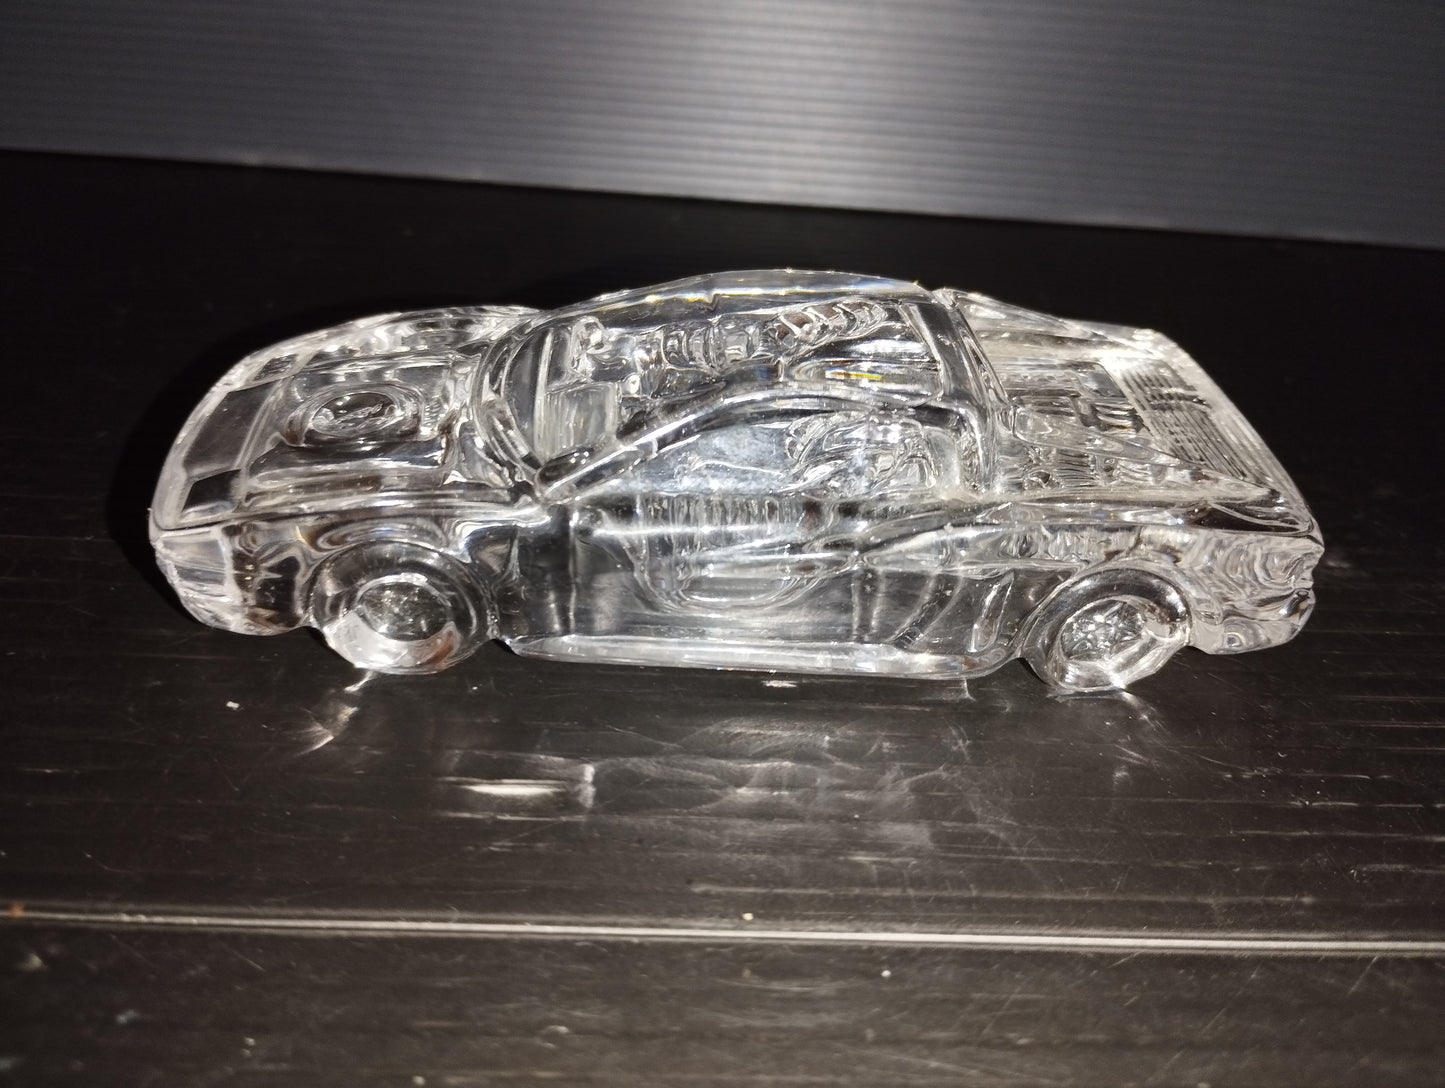 Ferrari Testarossa Model In Crystal Glass